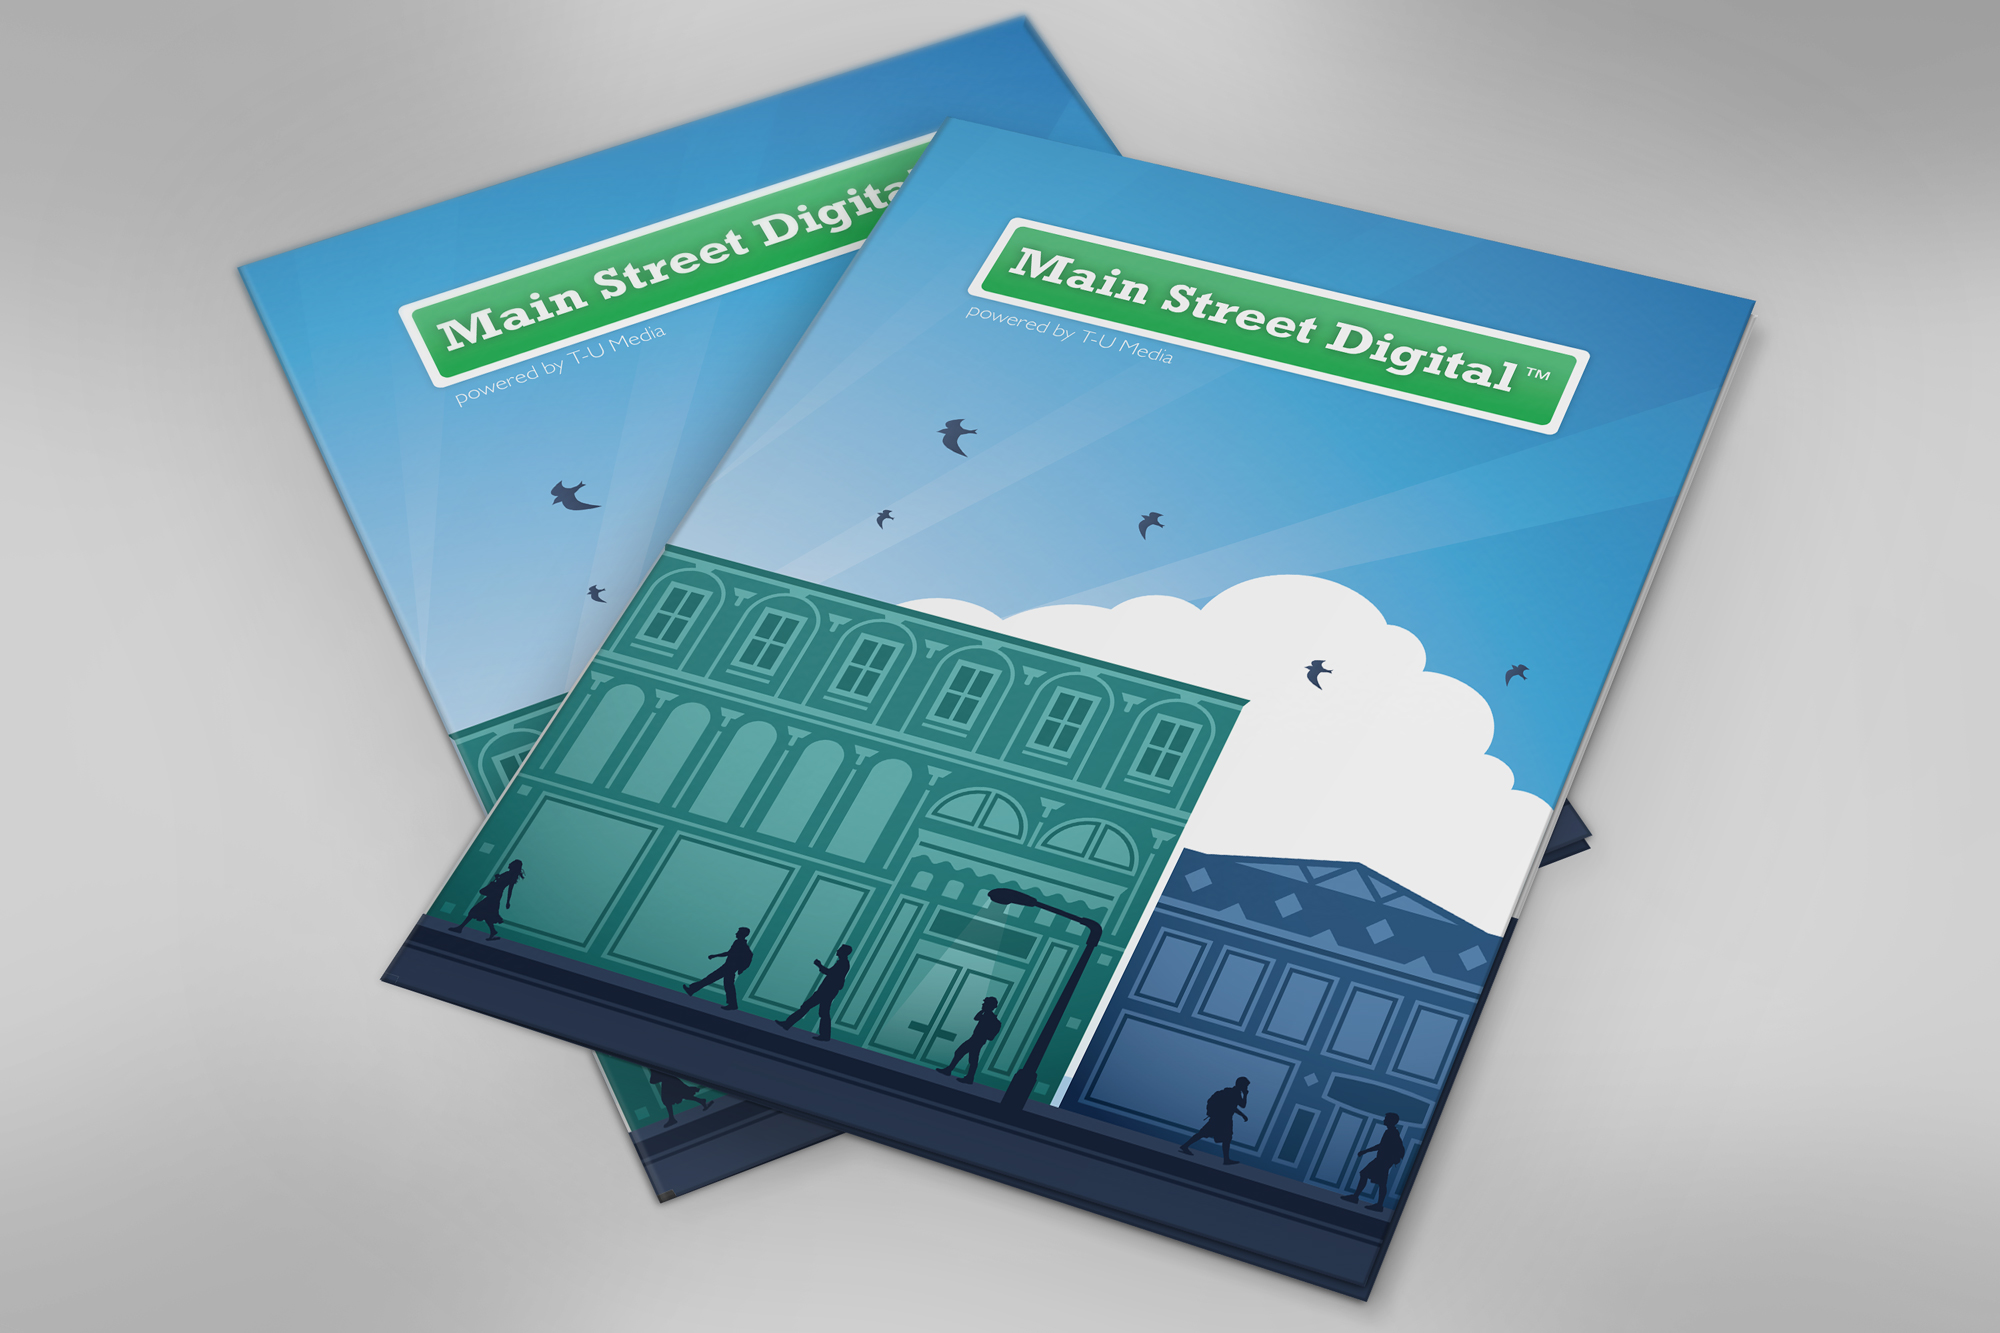 Main Street Digital Marketing Folders